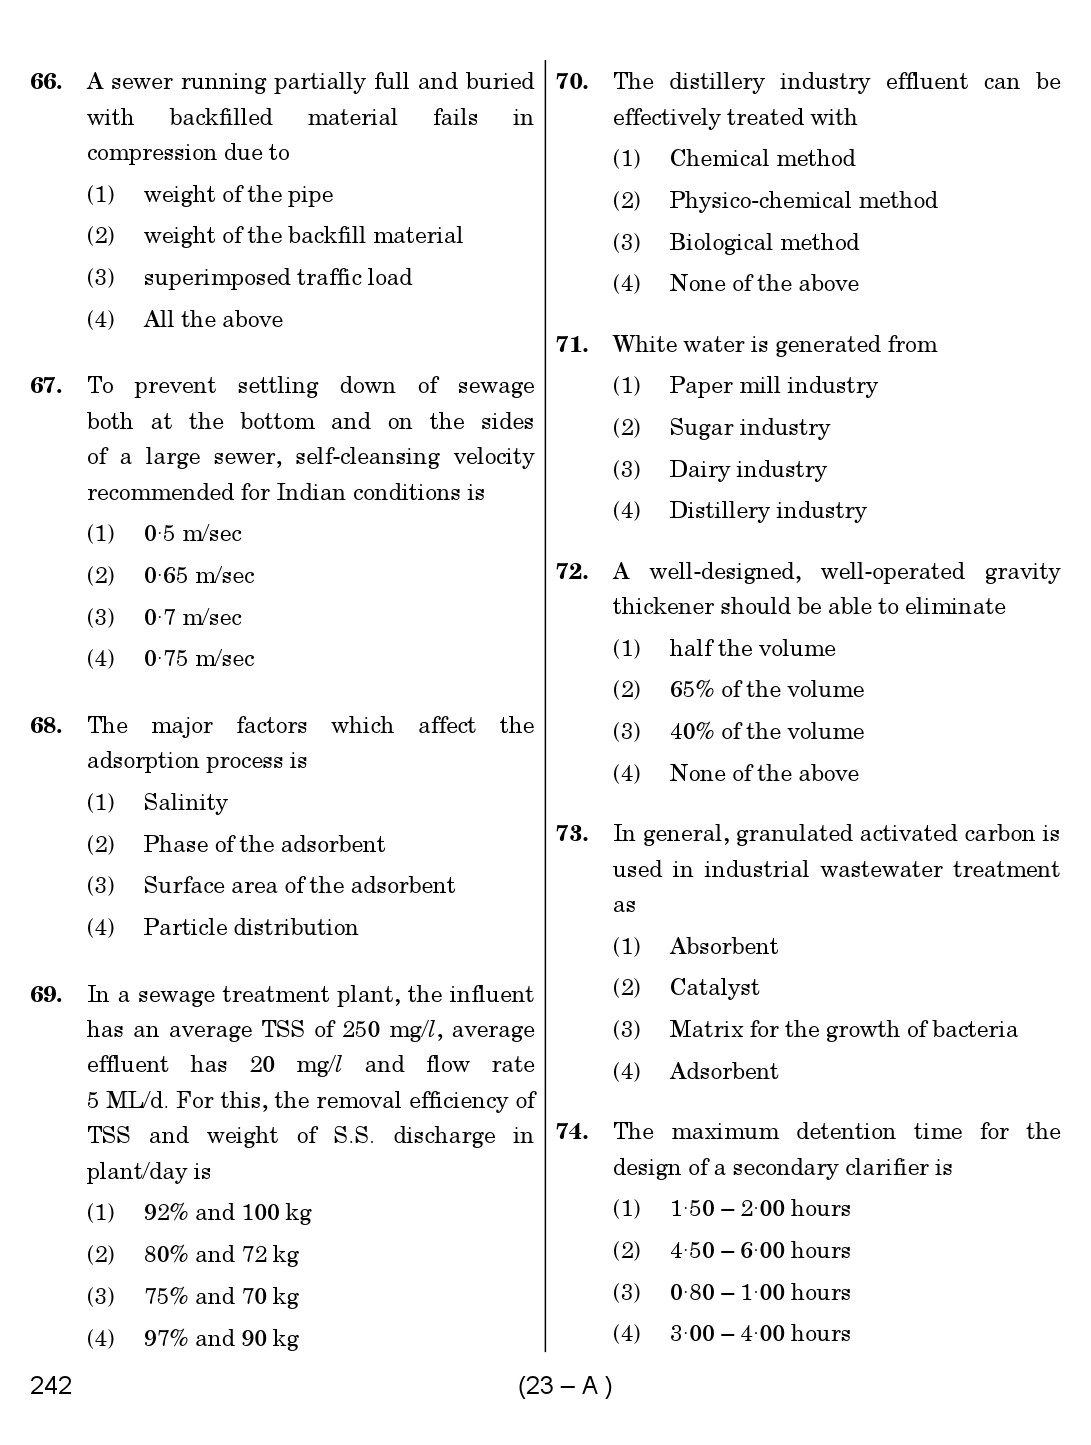 Karnataka PSC Environmental Engineer Exam Sample Question Paper 23